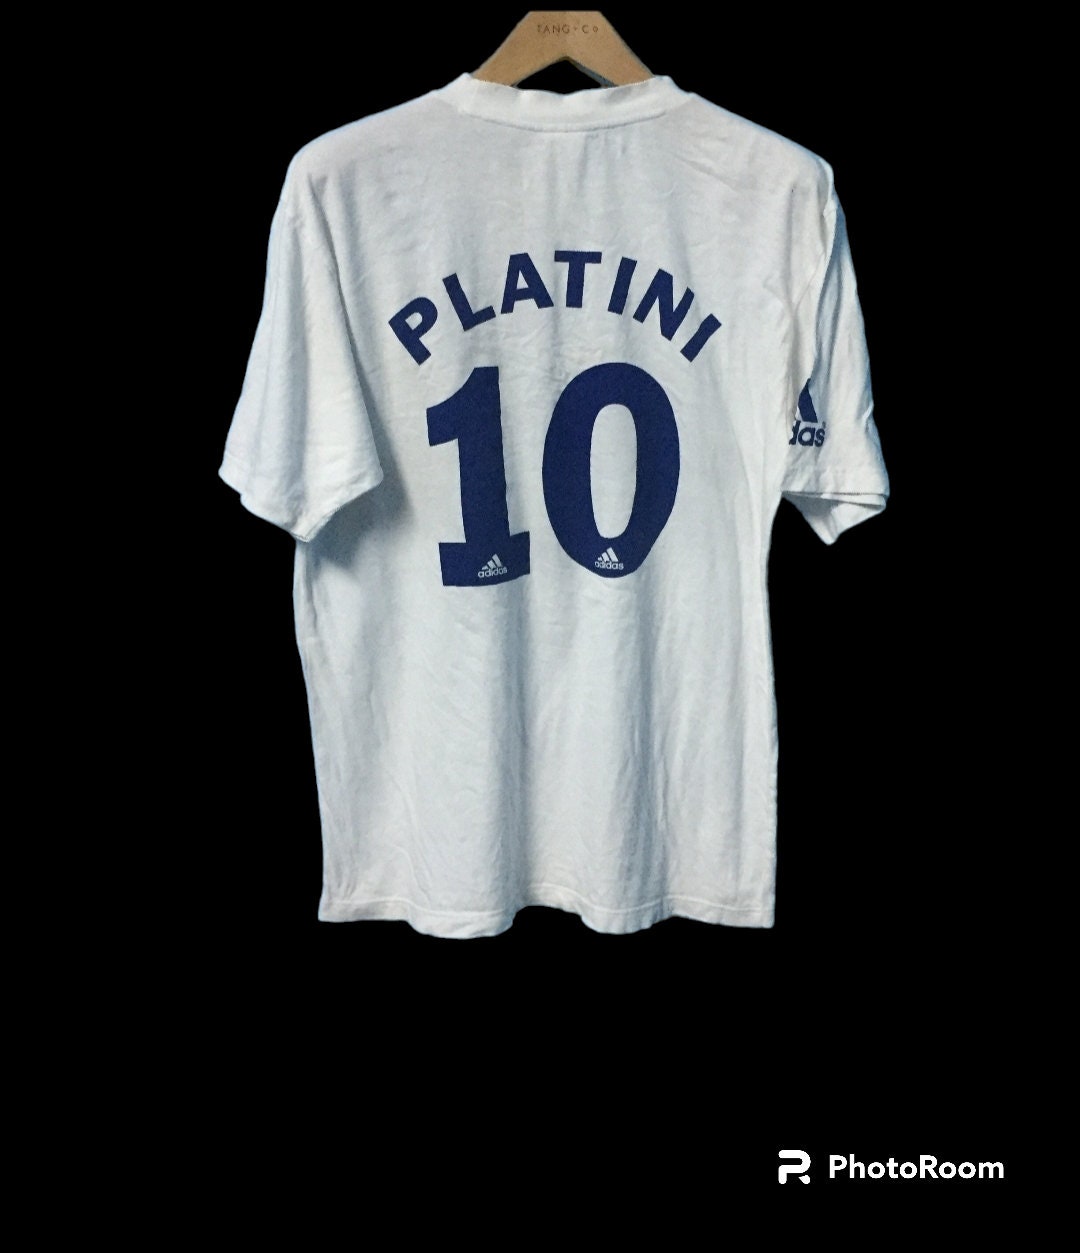 Rarevintage 90s Adidas Michel Platini France Football Player - Etsy